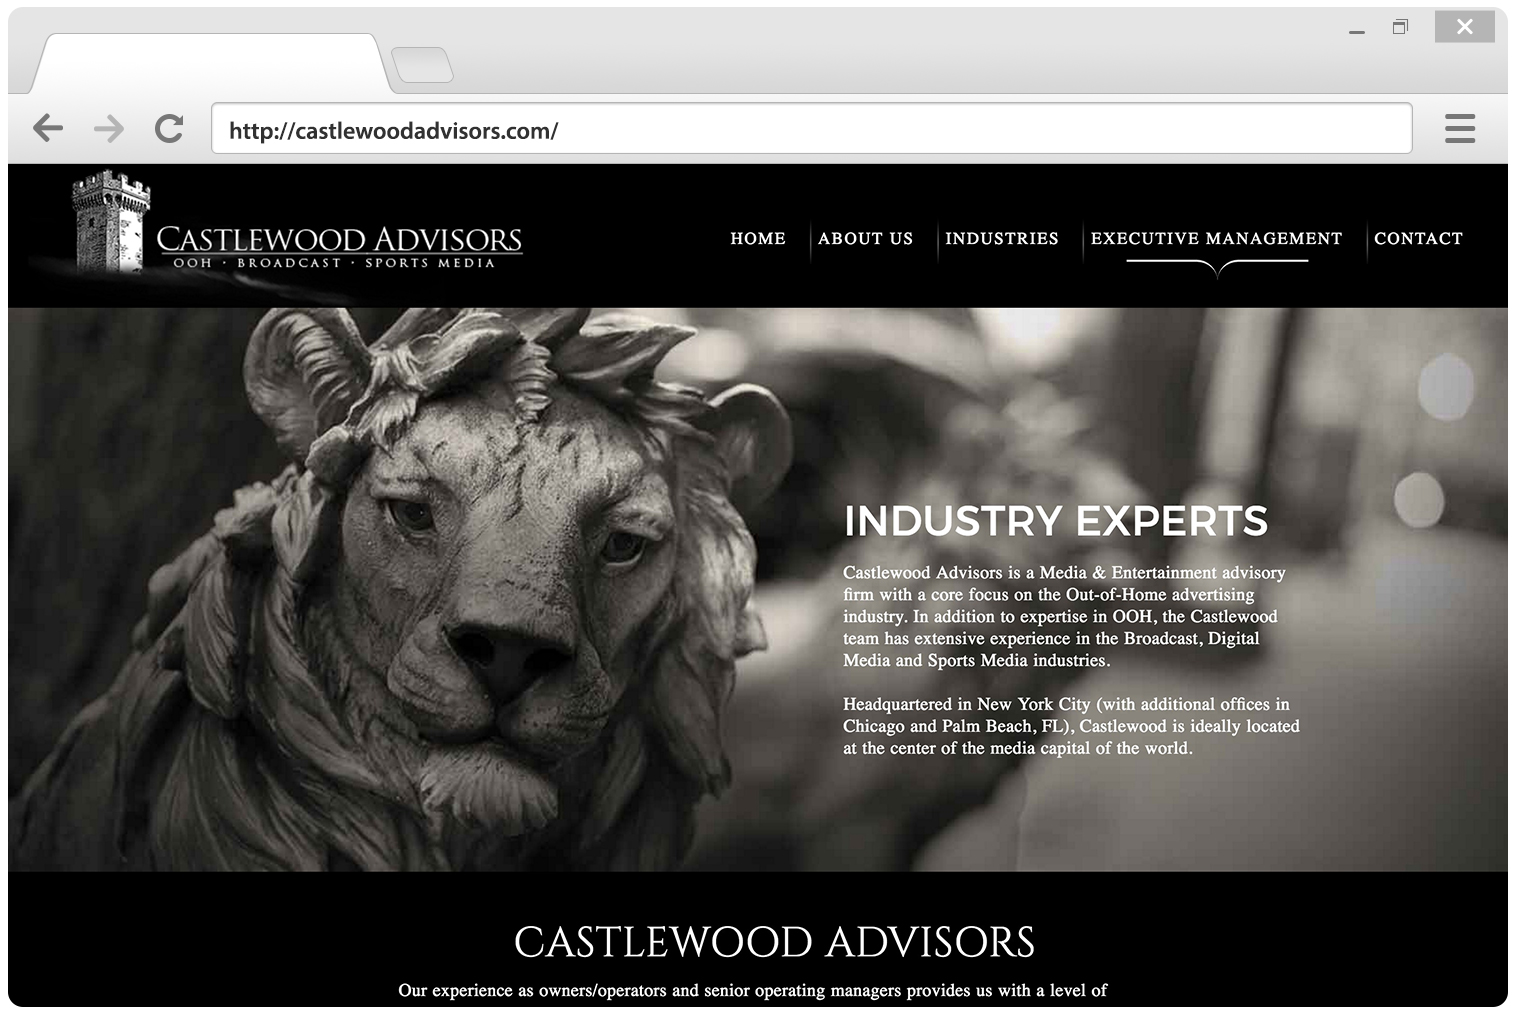 Castlewood Advisors